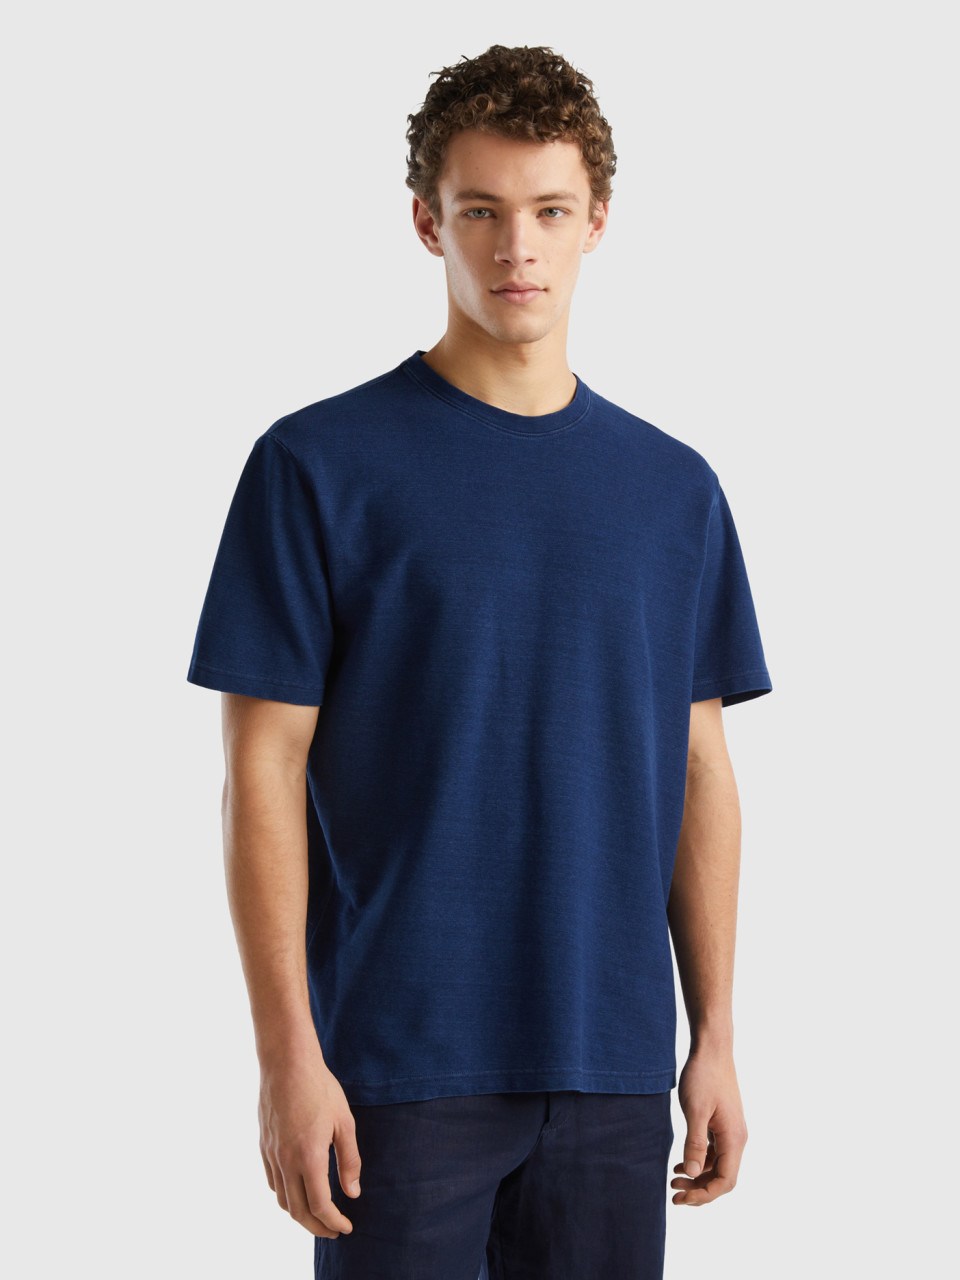 Benetton, T-shirt Relaxed Fit, größe M, Blau